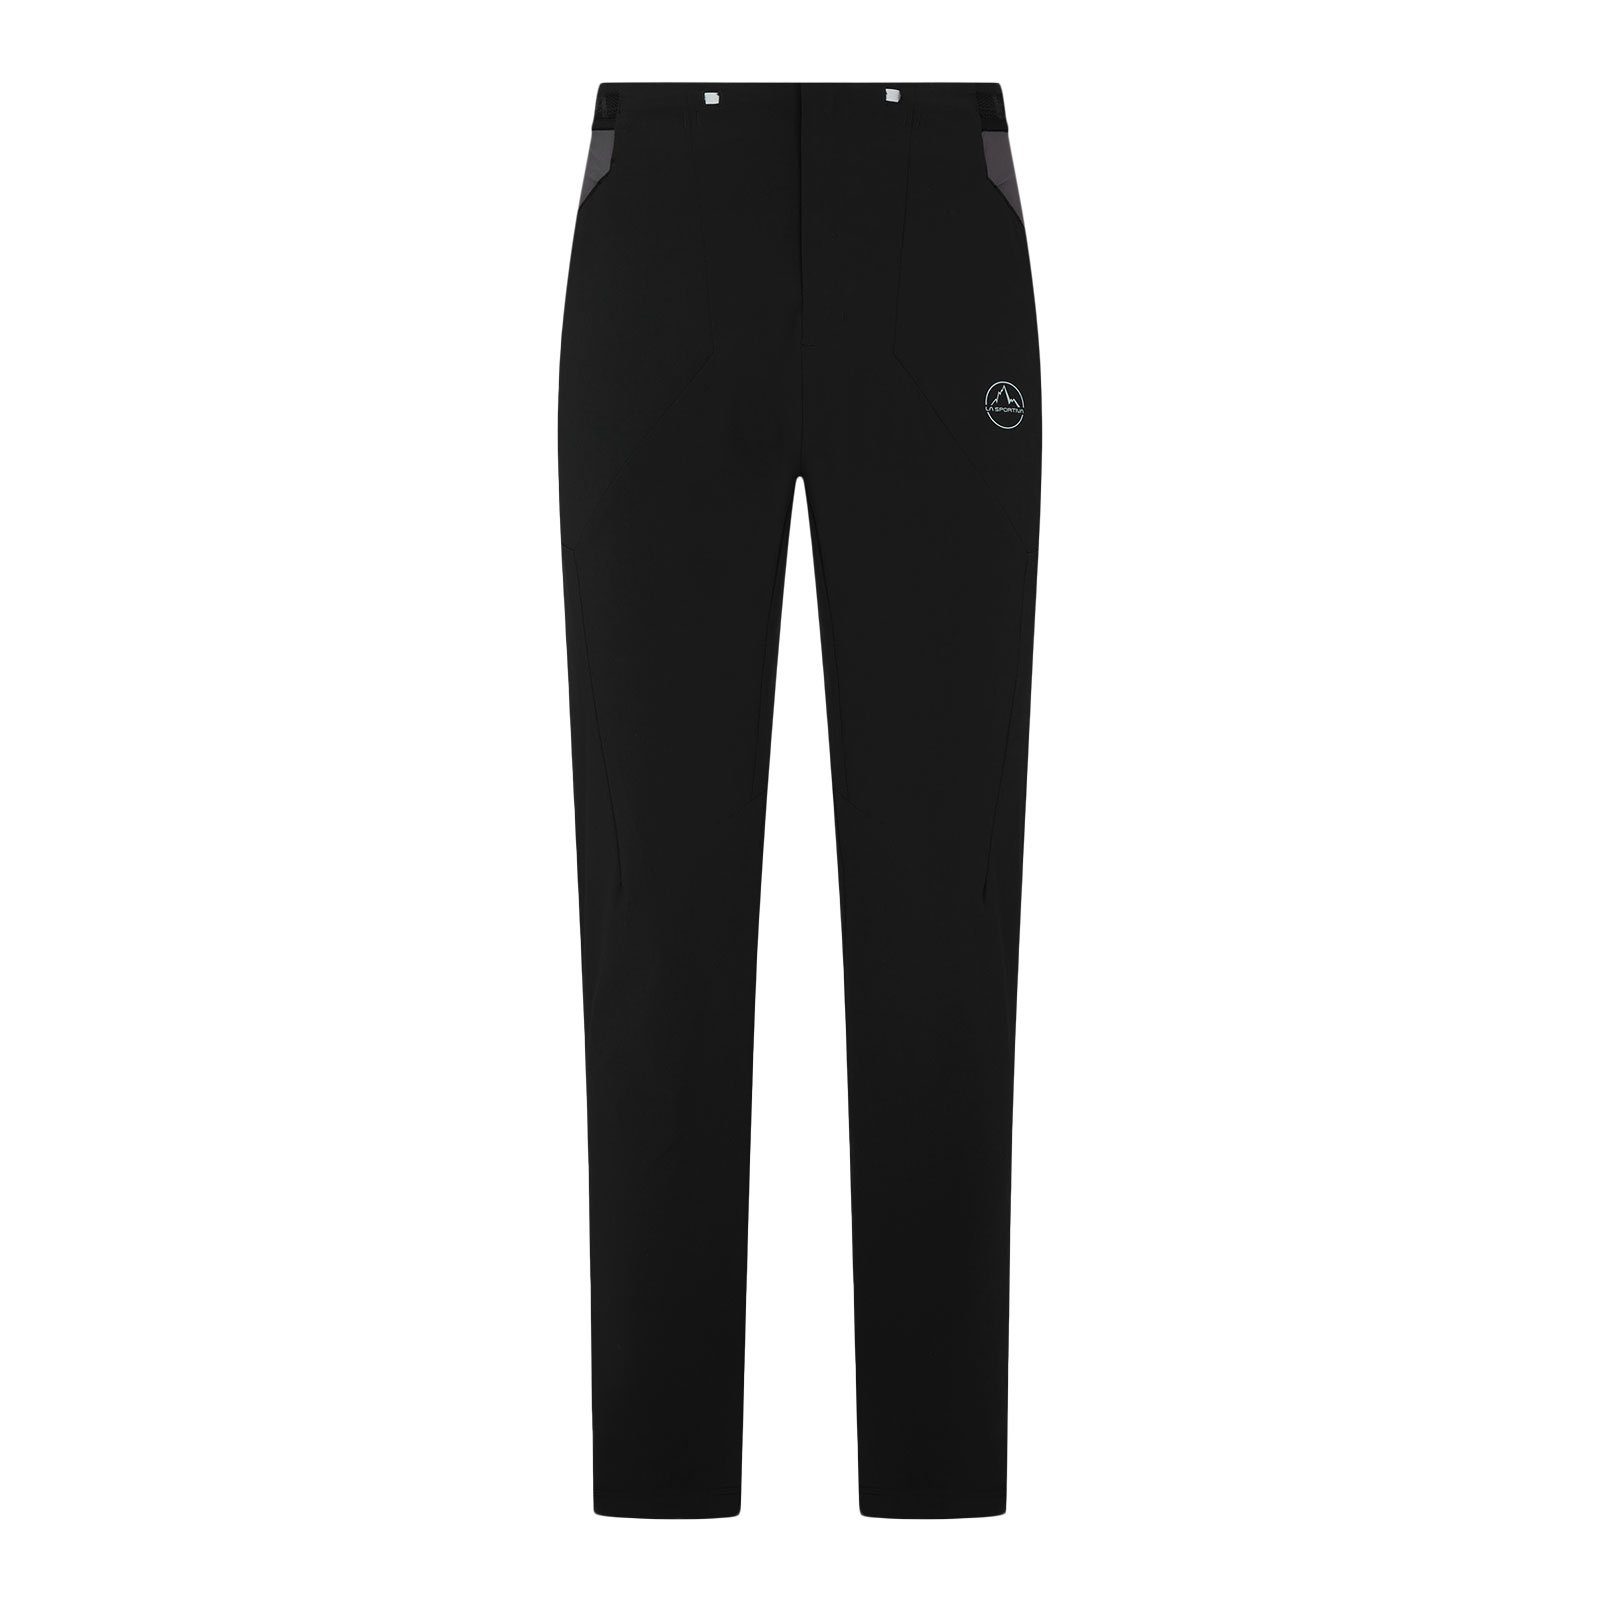 La Sportiva Trekkinghose Brush Pant aus besonders leichtem, elastischem und atmungsaktivem Material 999900 black / carbon